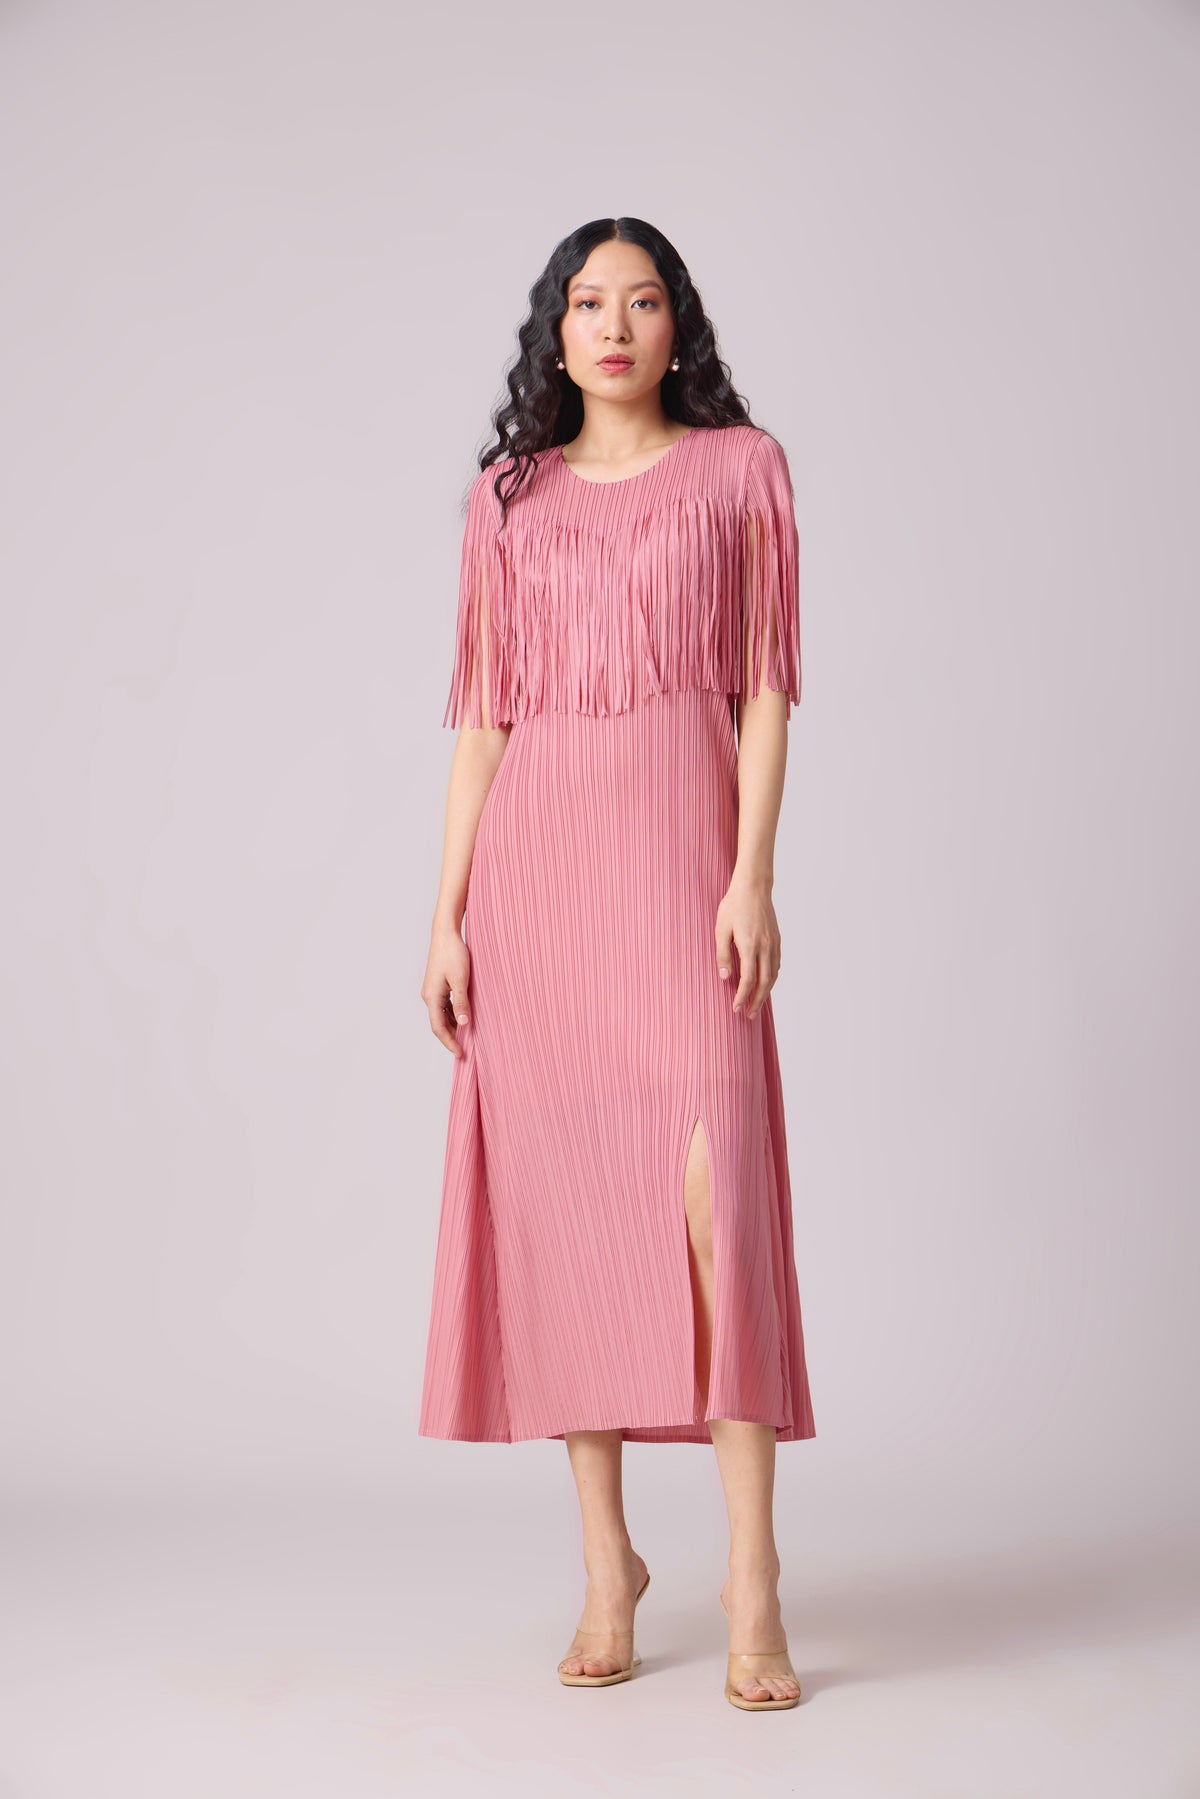 Alisha Fringe Dress - Pink